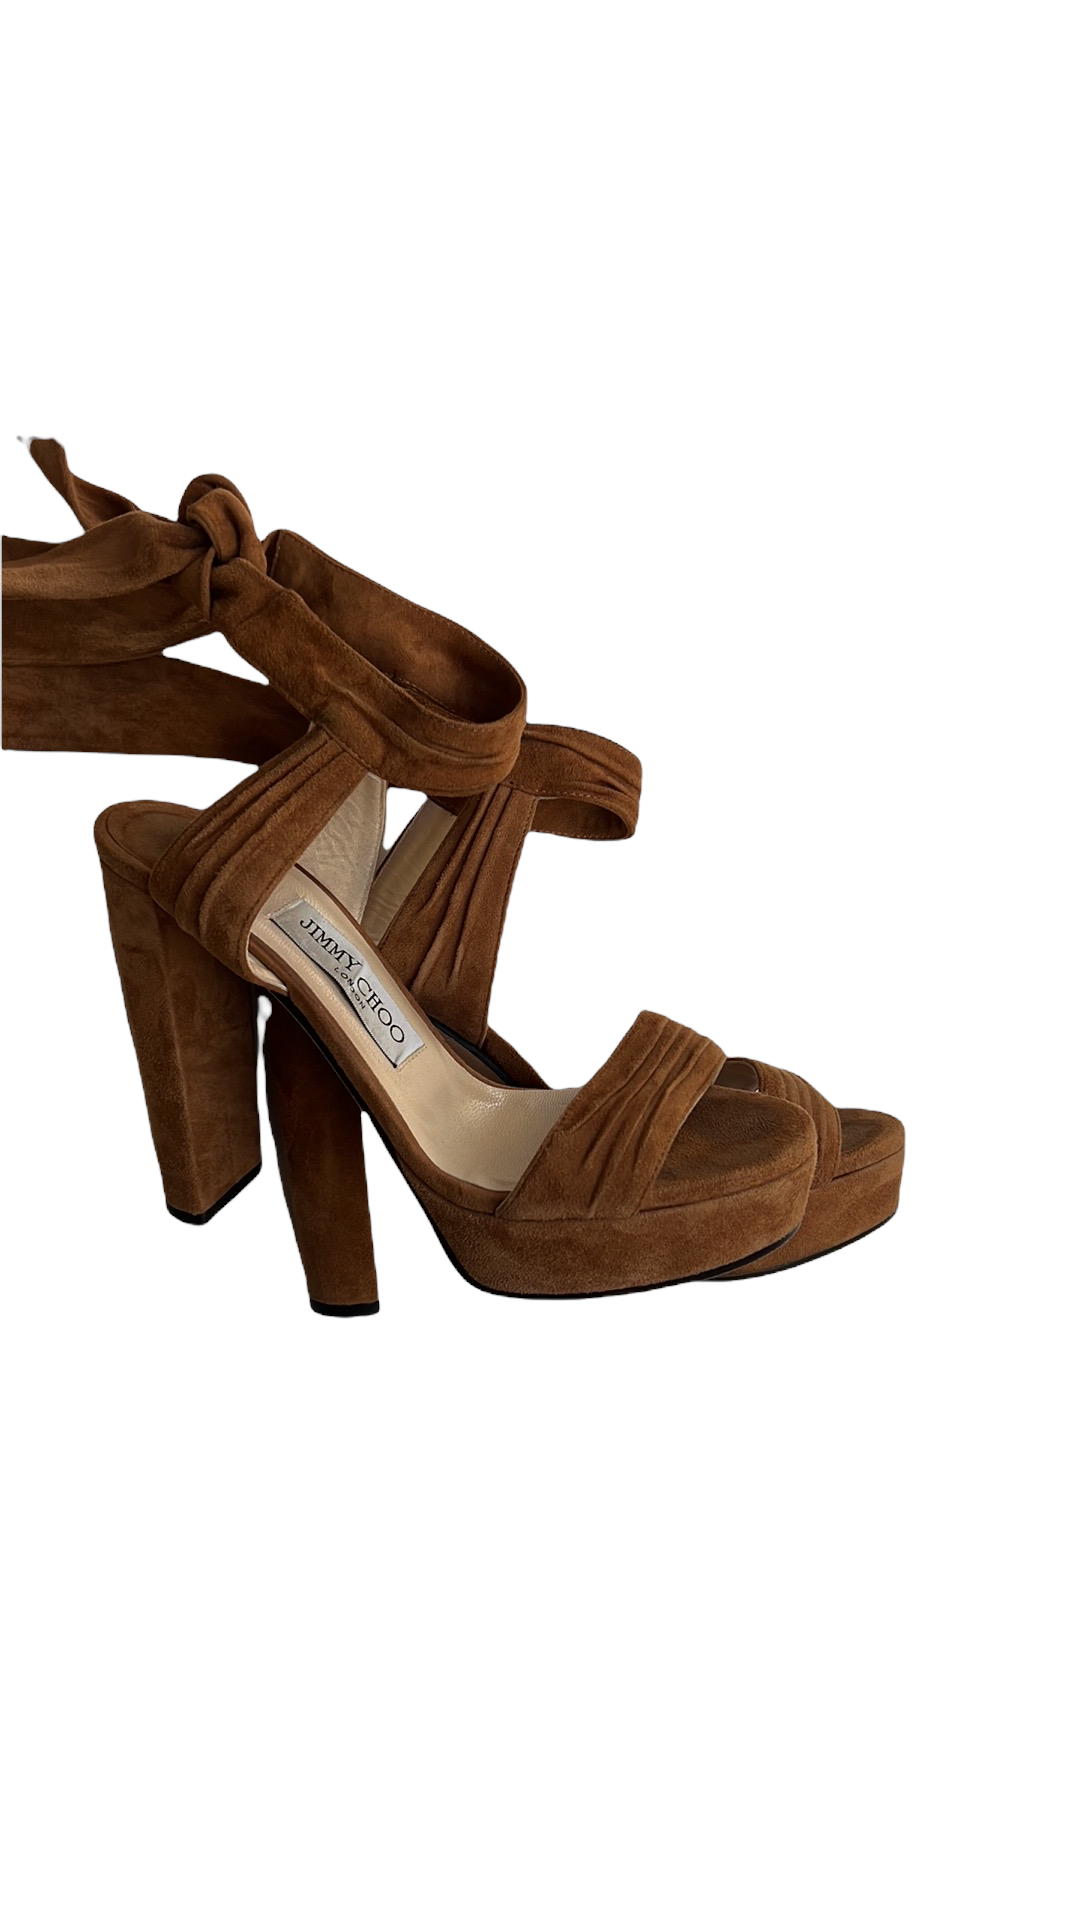 Camel Suede Sandals - 6.5